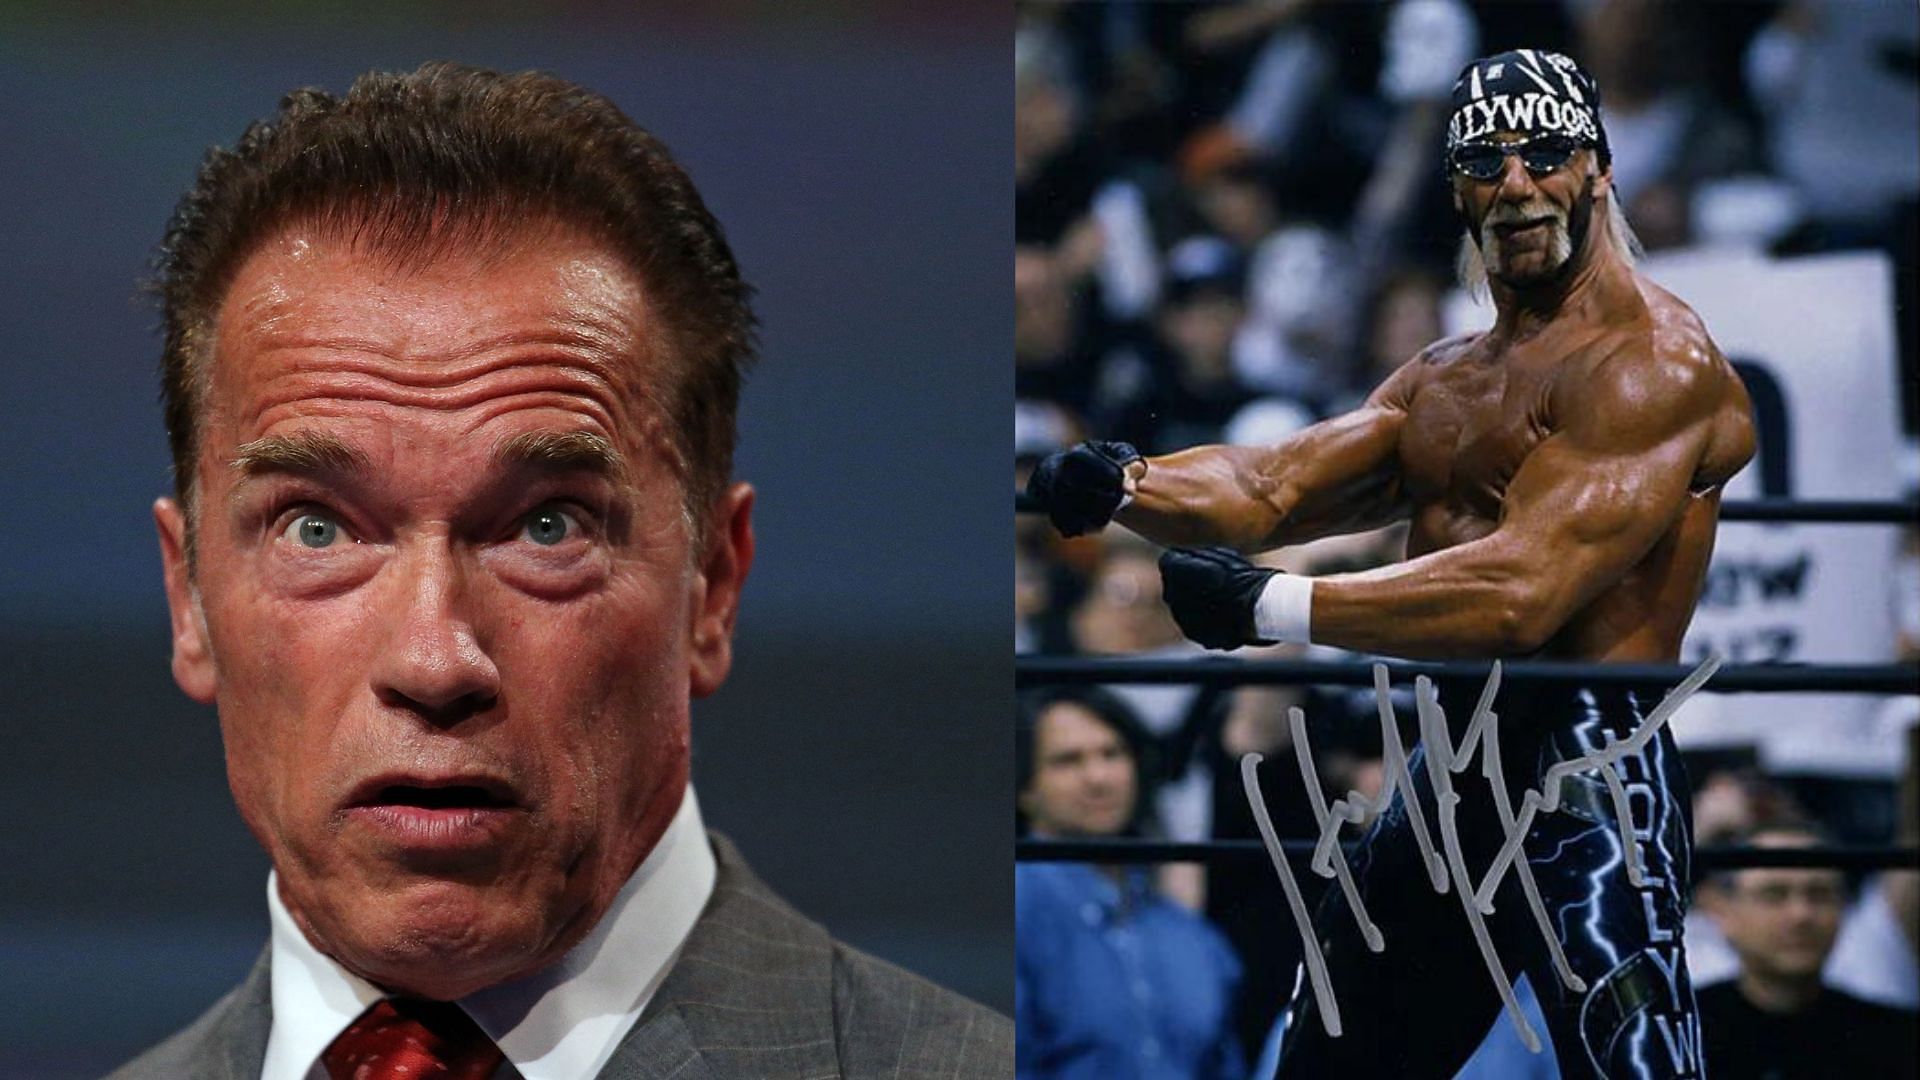 Arnold Schwarzenegger and Hulk Hogan are WWE Hall of Famers